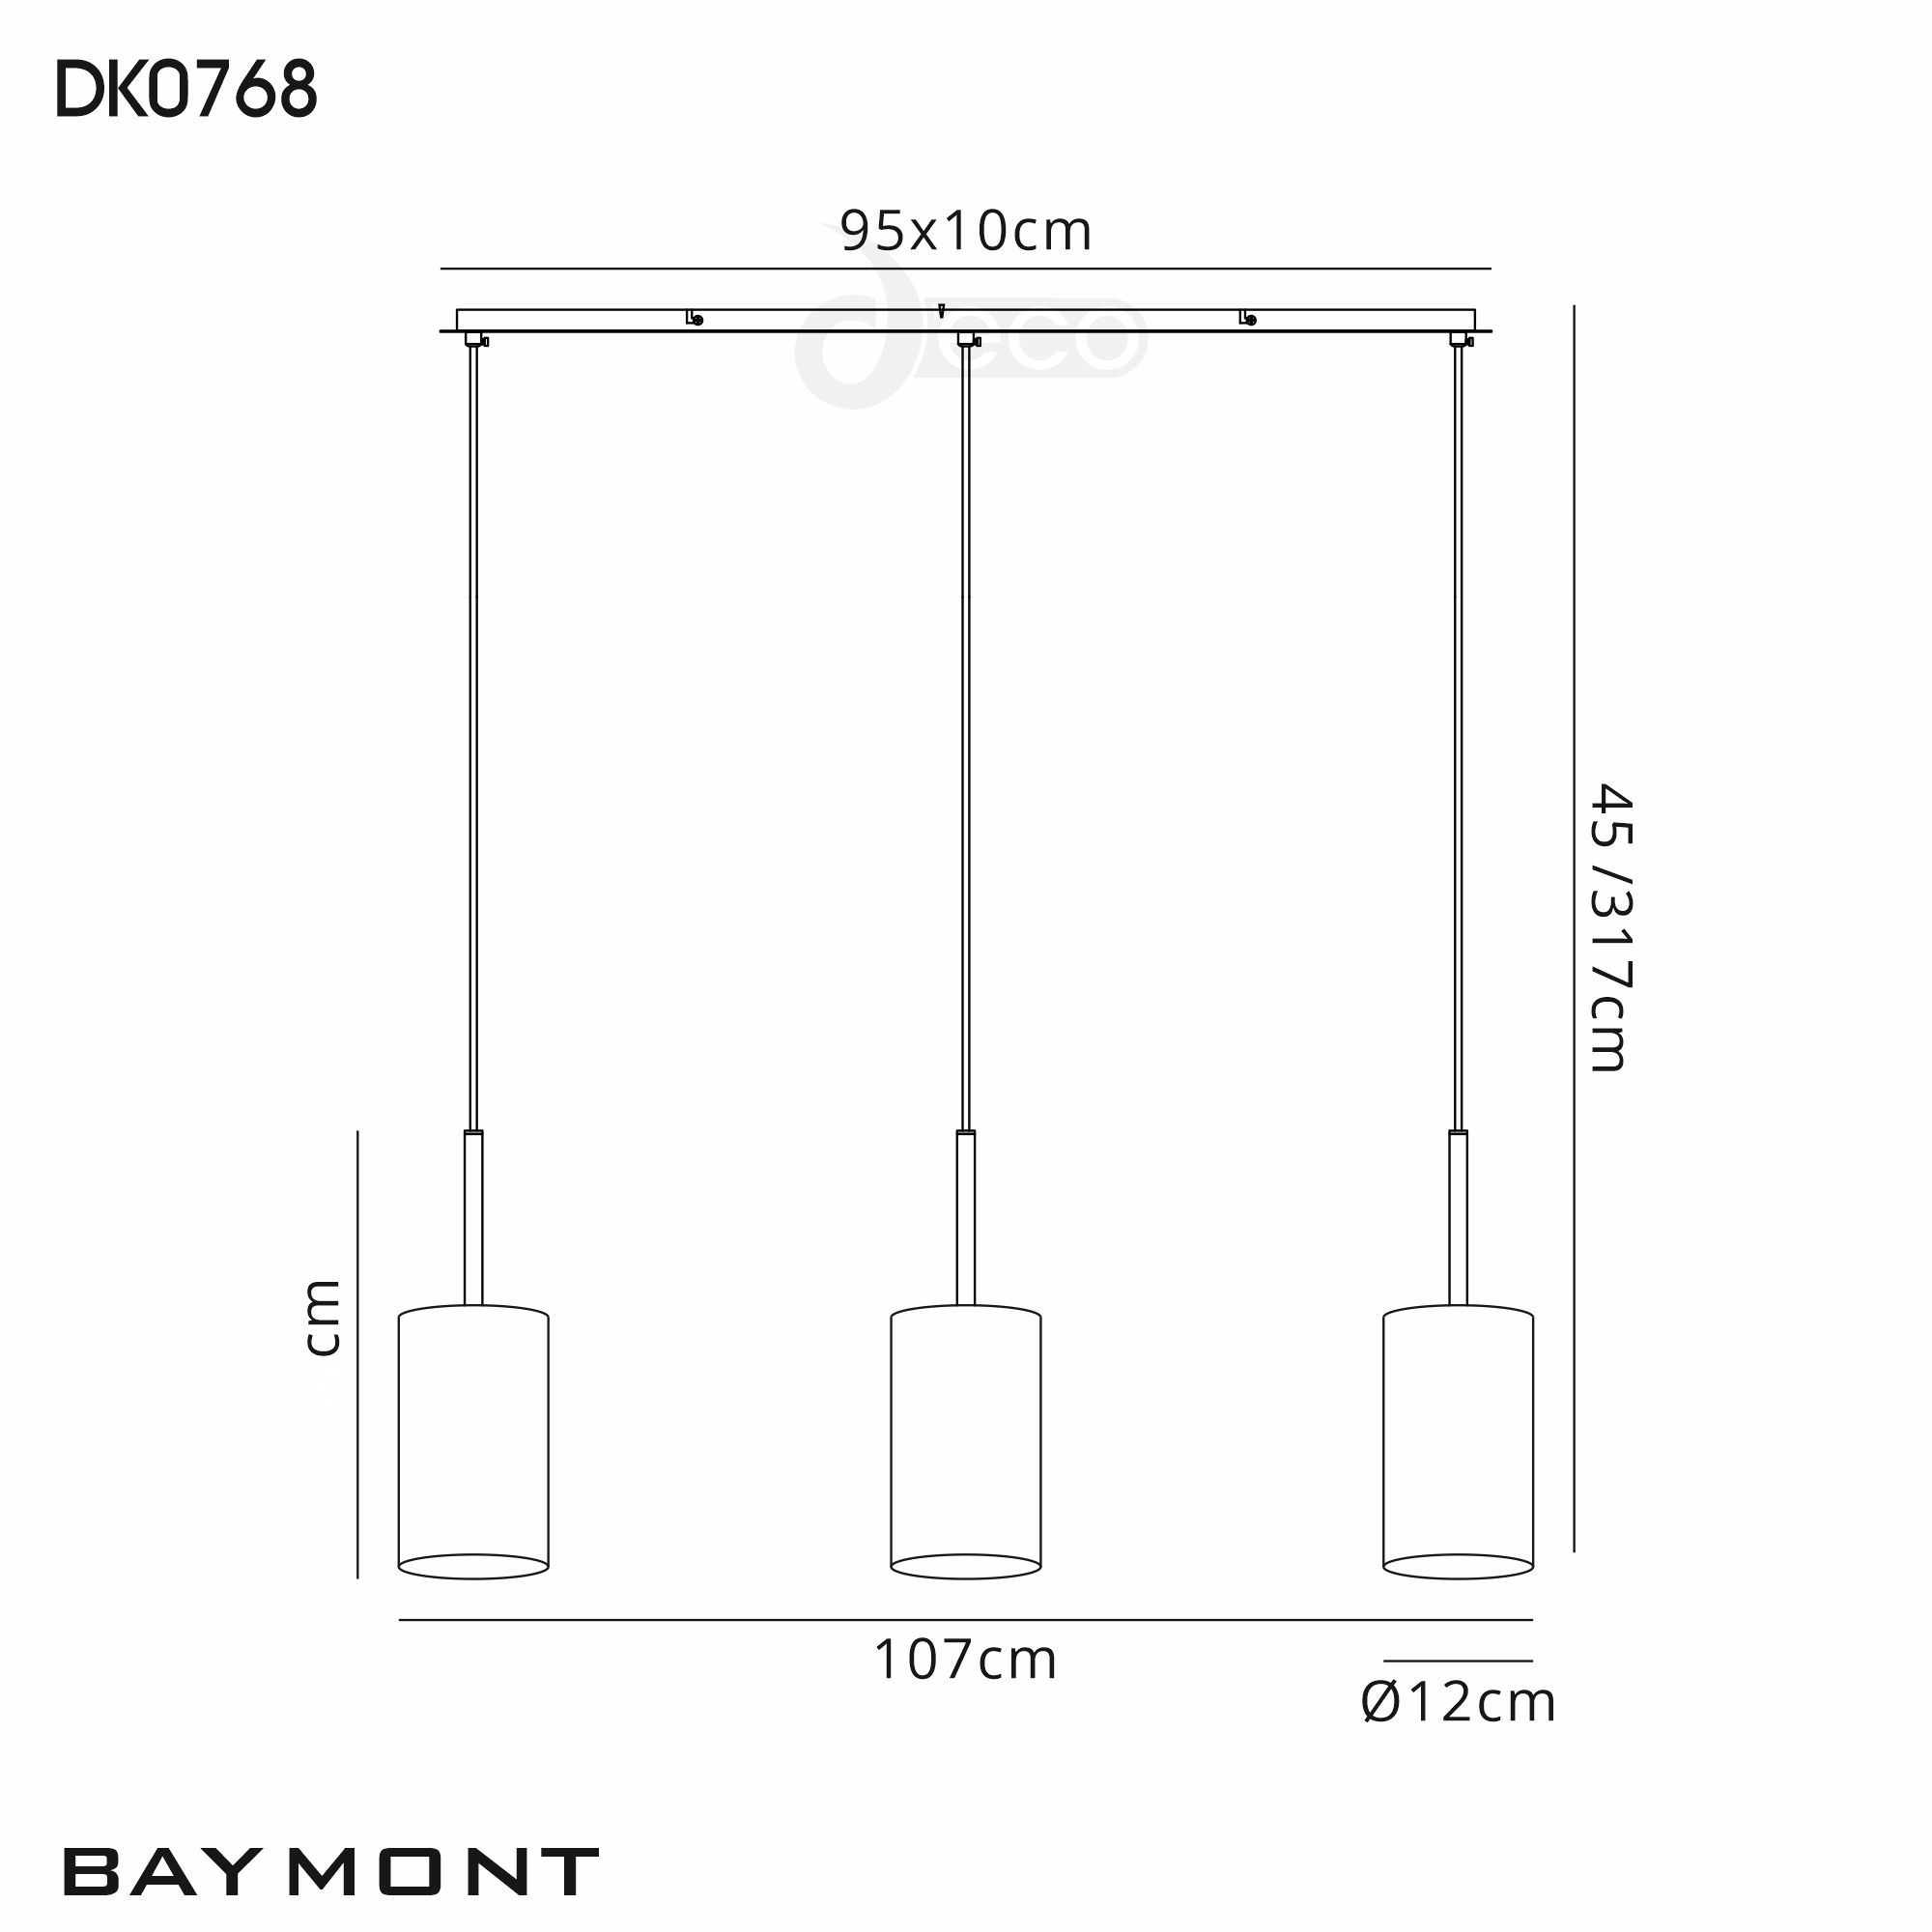 DK0768  Baymont 12cm Shade 3 Light Pendant Polished Chrome, Grey/White